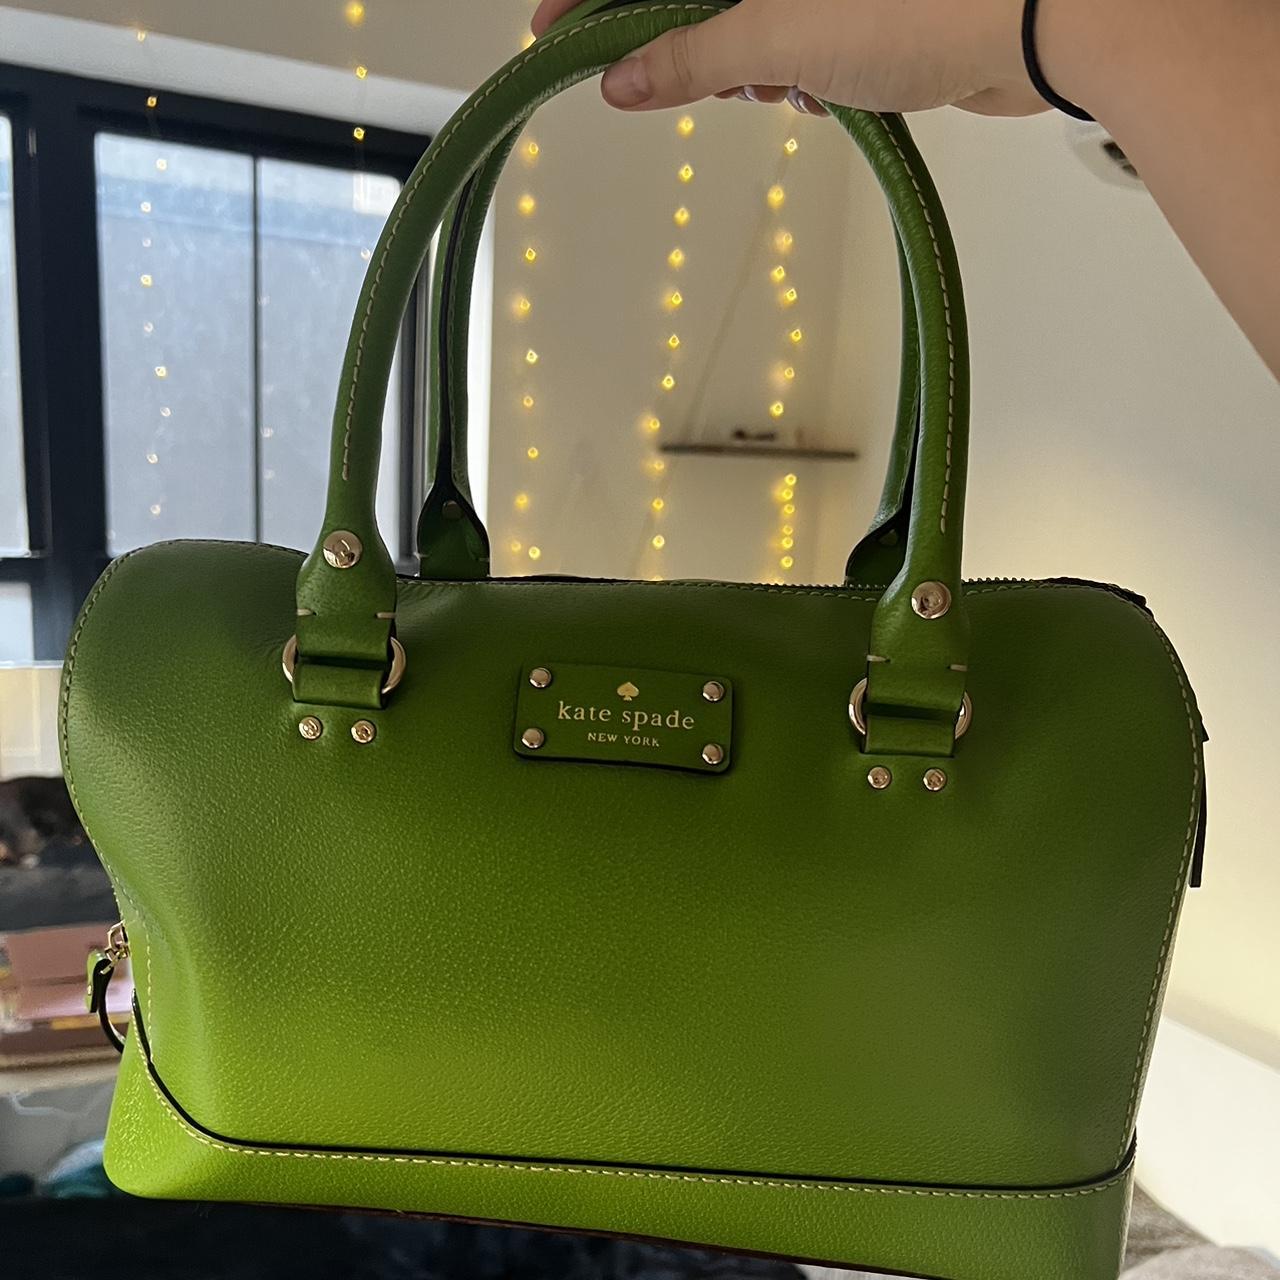 Kate Spade New York Women's Green Bag | Depop